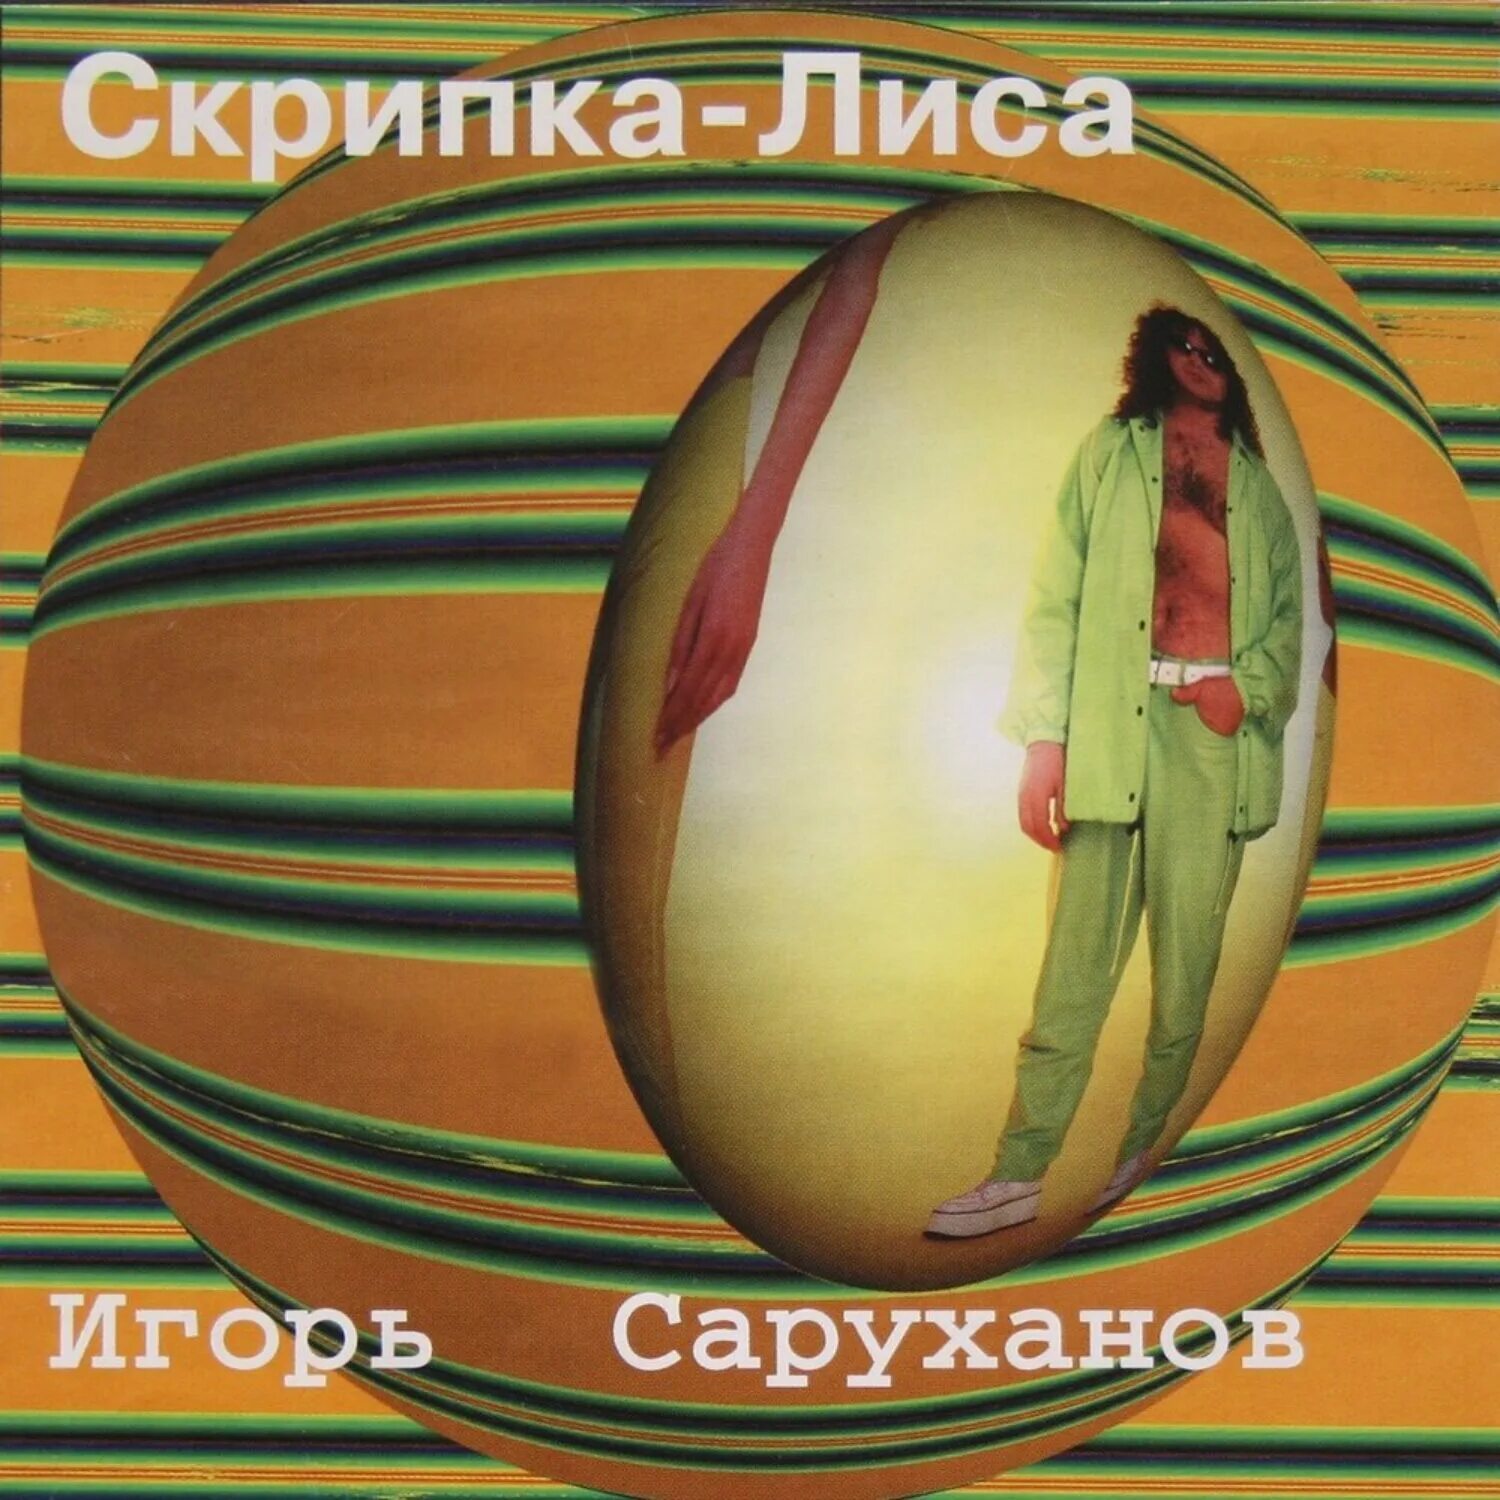 Саруханова скрипка лиса. Скрипка лиса Игоря Саруханова. 1997 - Скрипка-лиса.